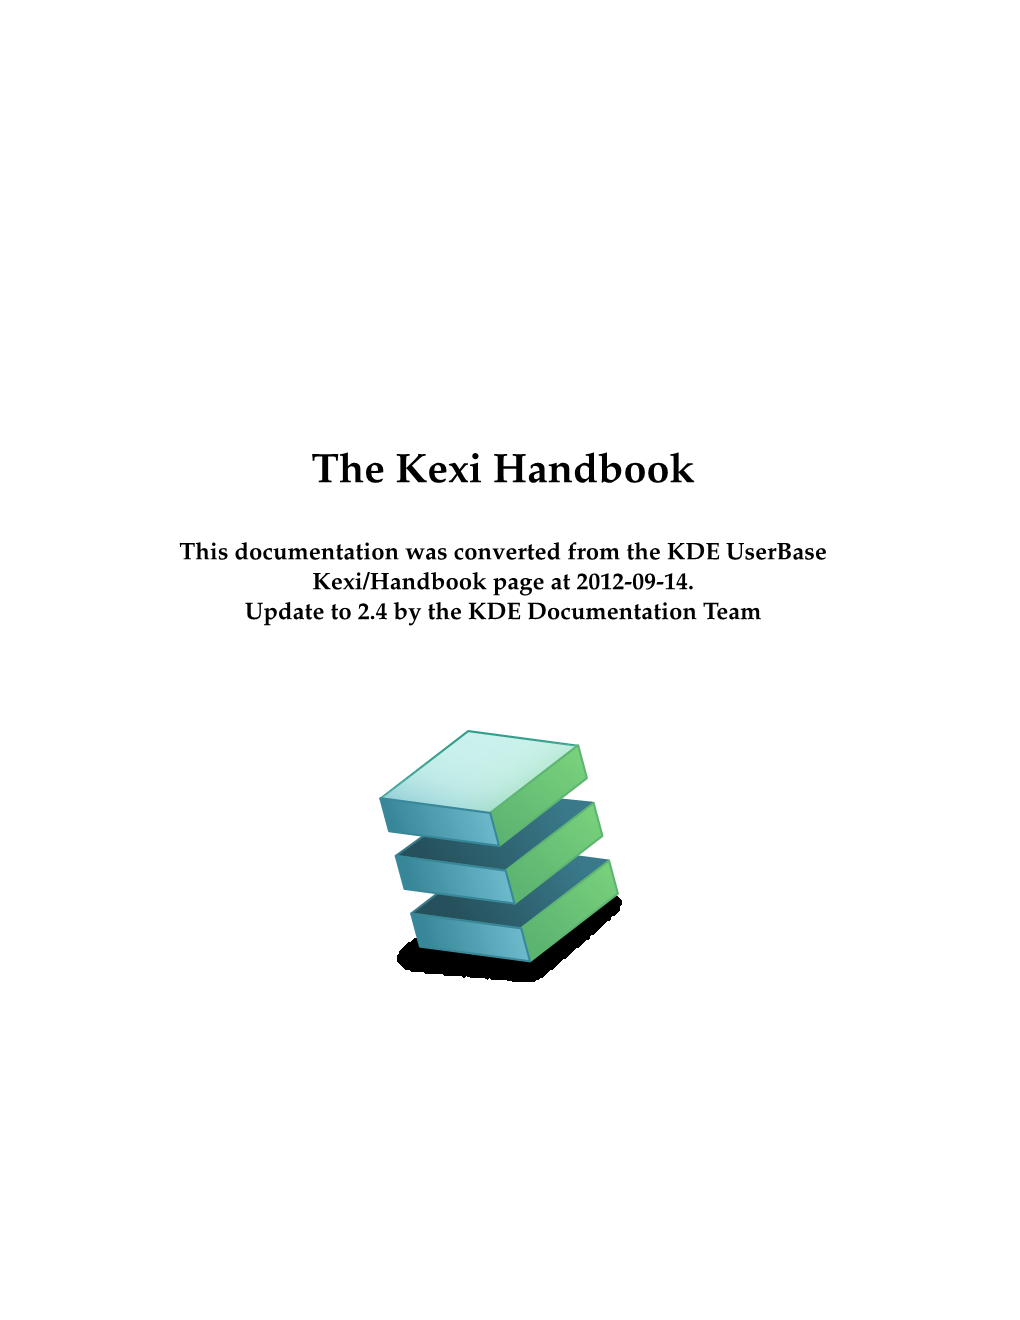 The Kexi Handbook